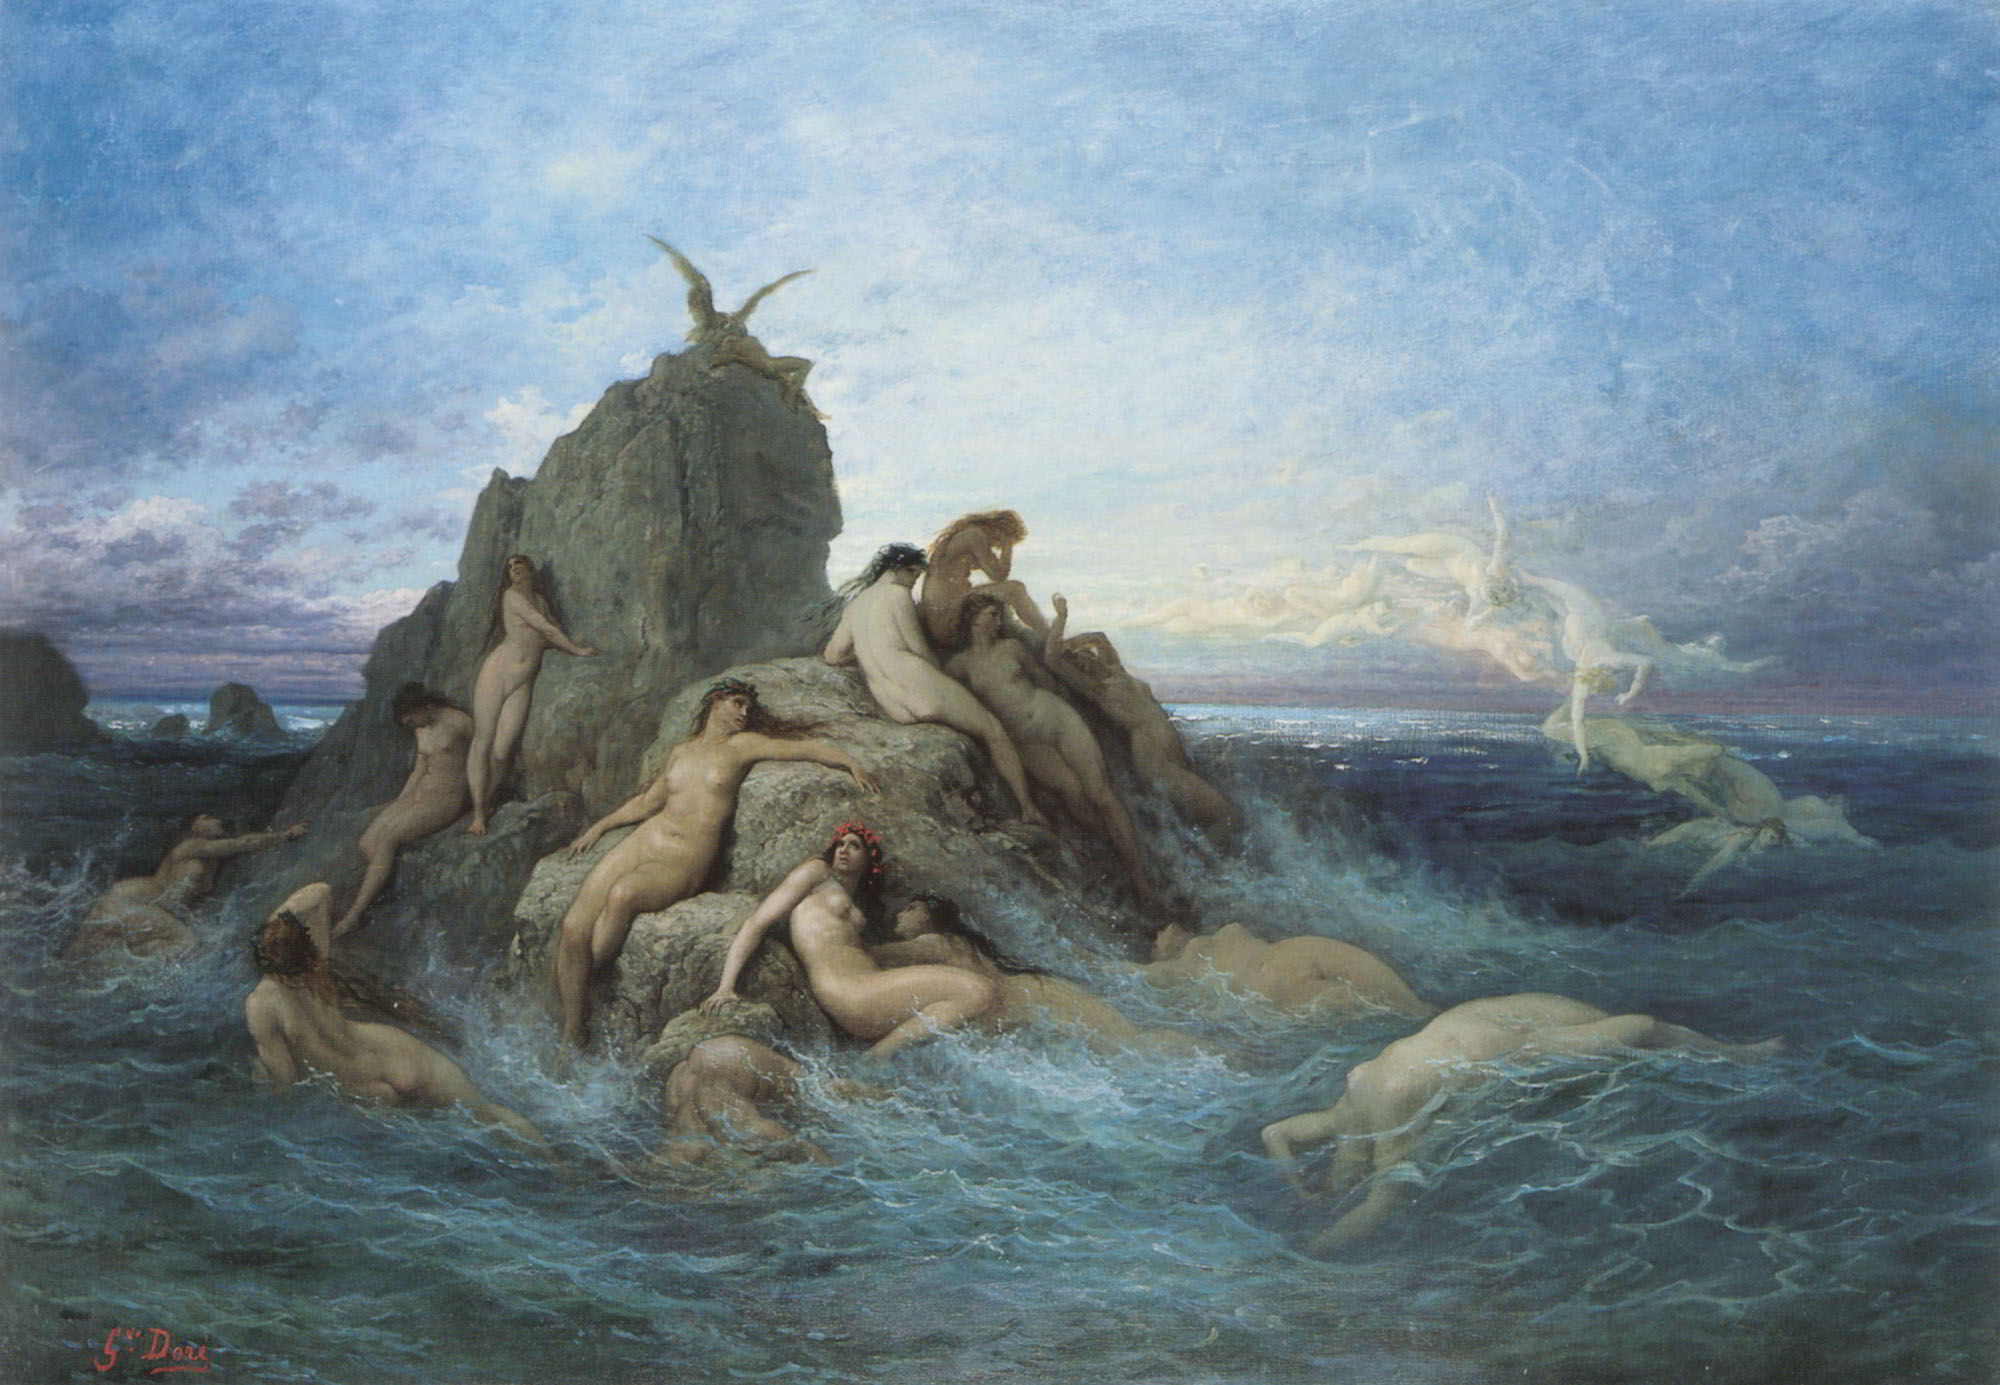 Les Oceanides (Les Naiades de la mer) by Gustave Dore